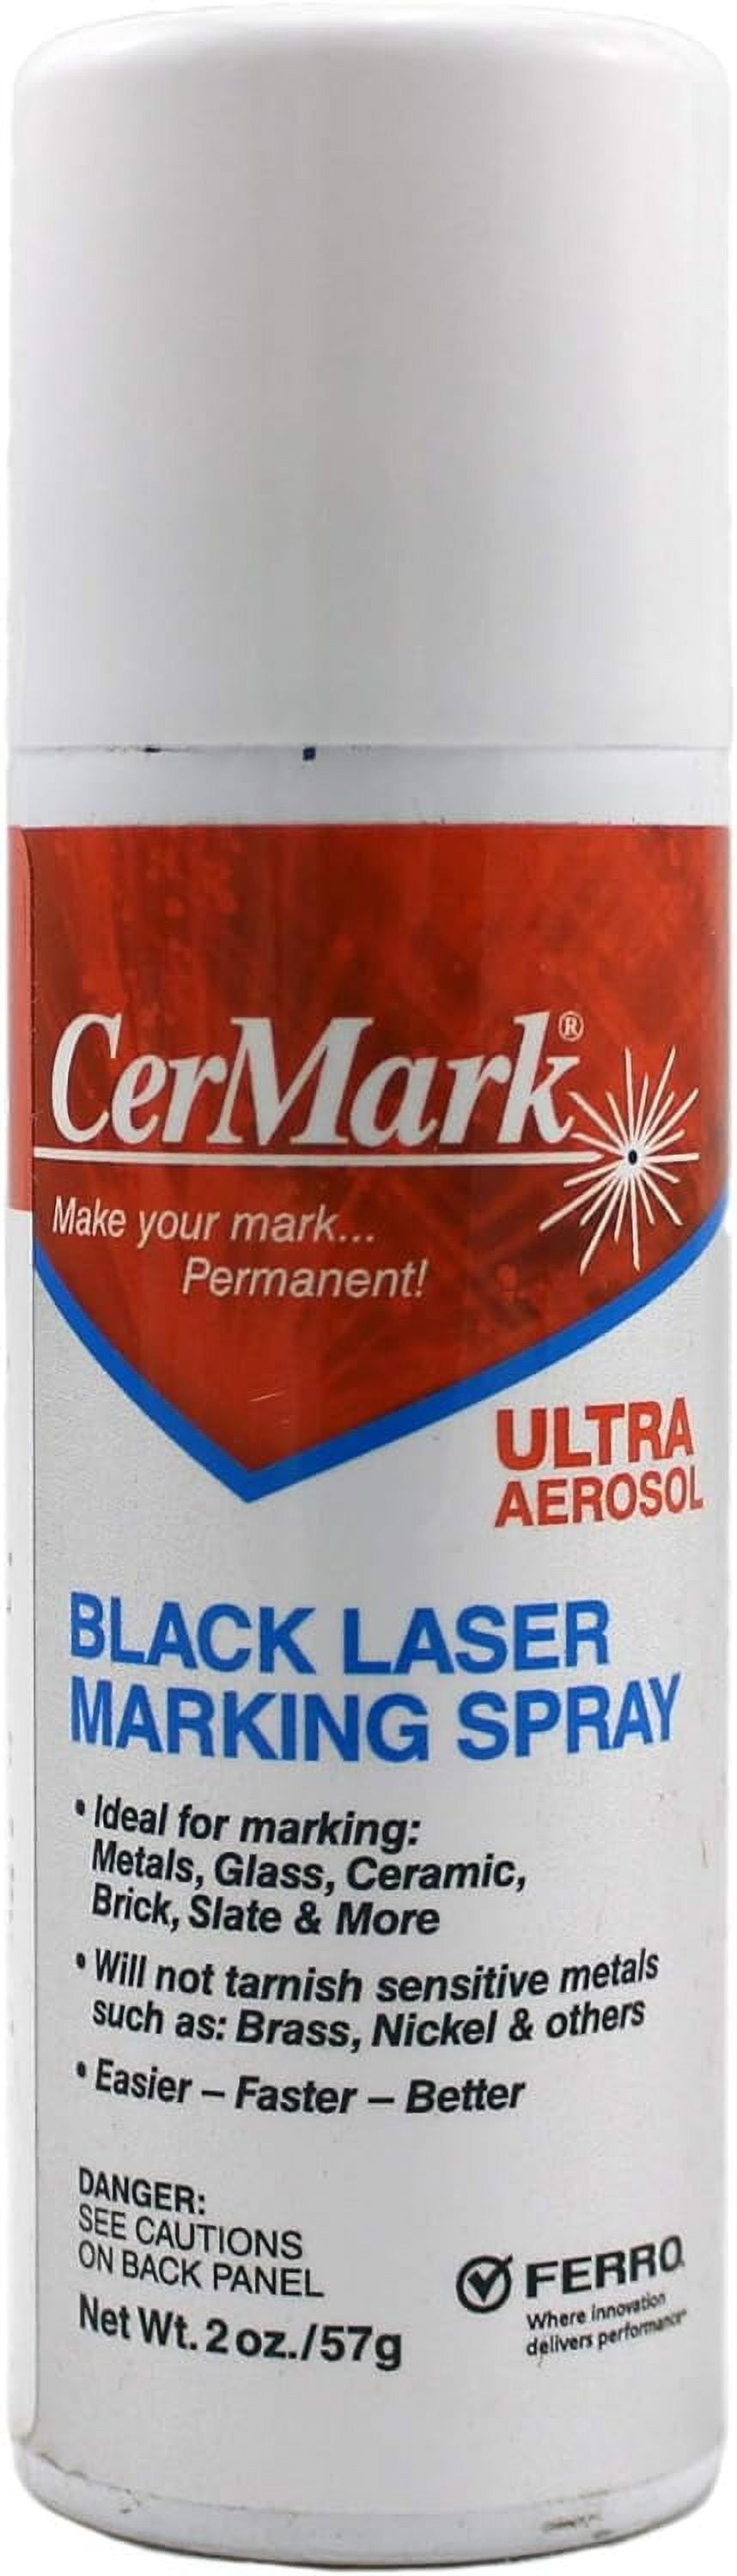 CerMark Ultra 50 Gram Liquid